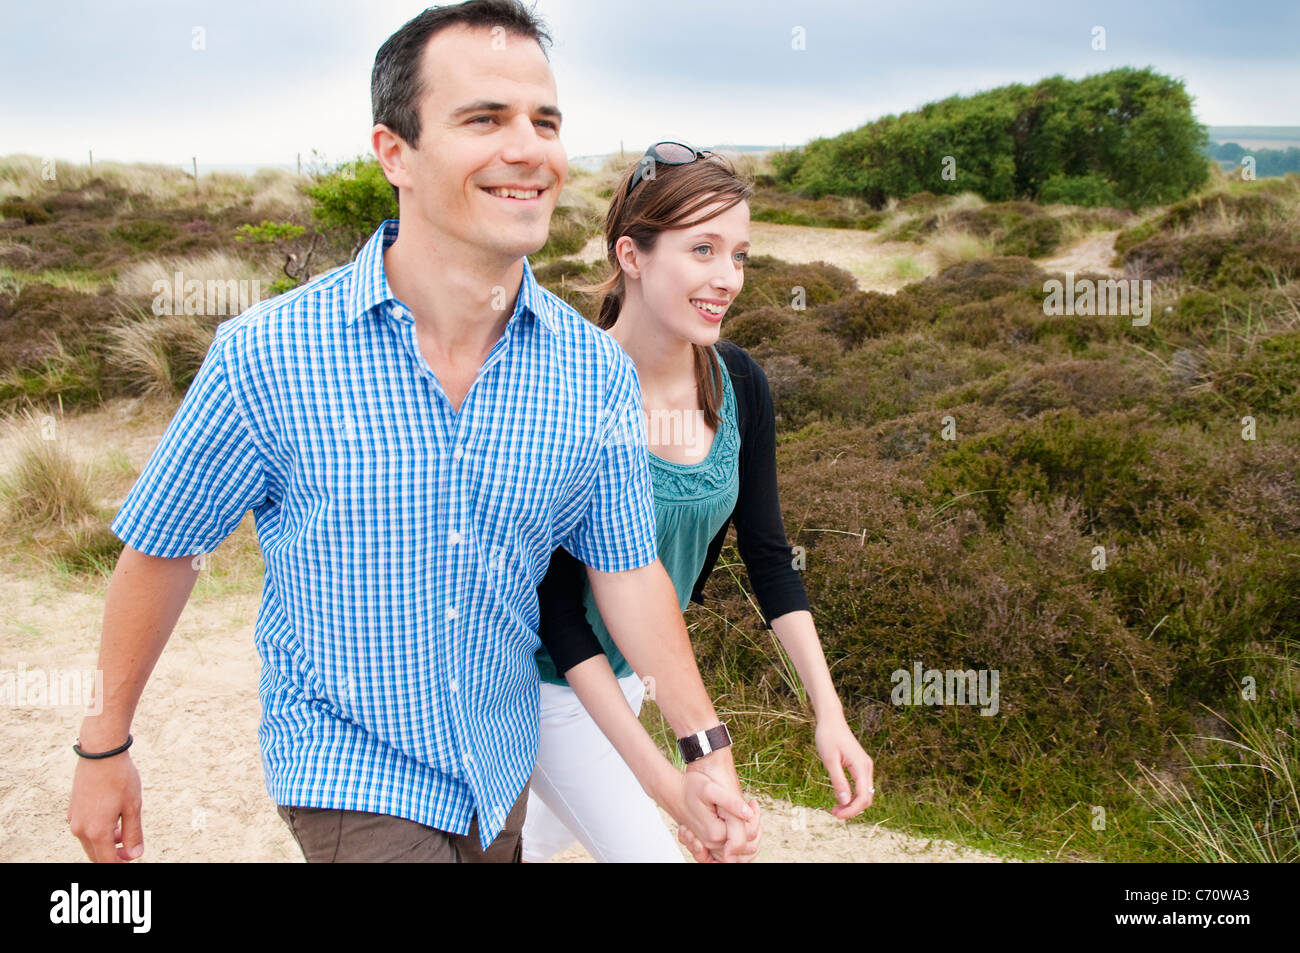 Couple walking hand-in-hand on beach Stock Photo